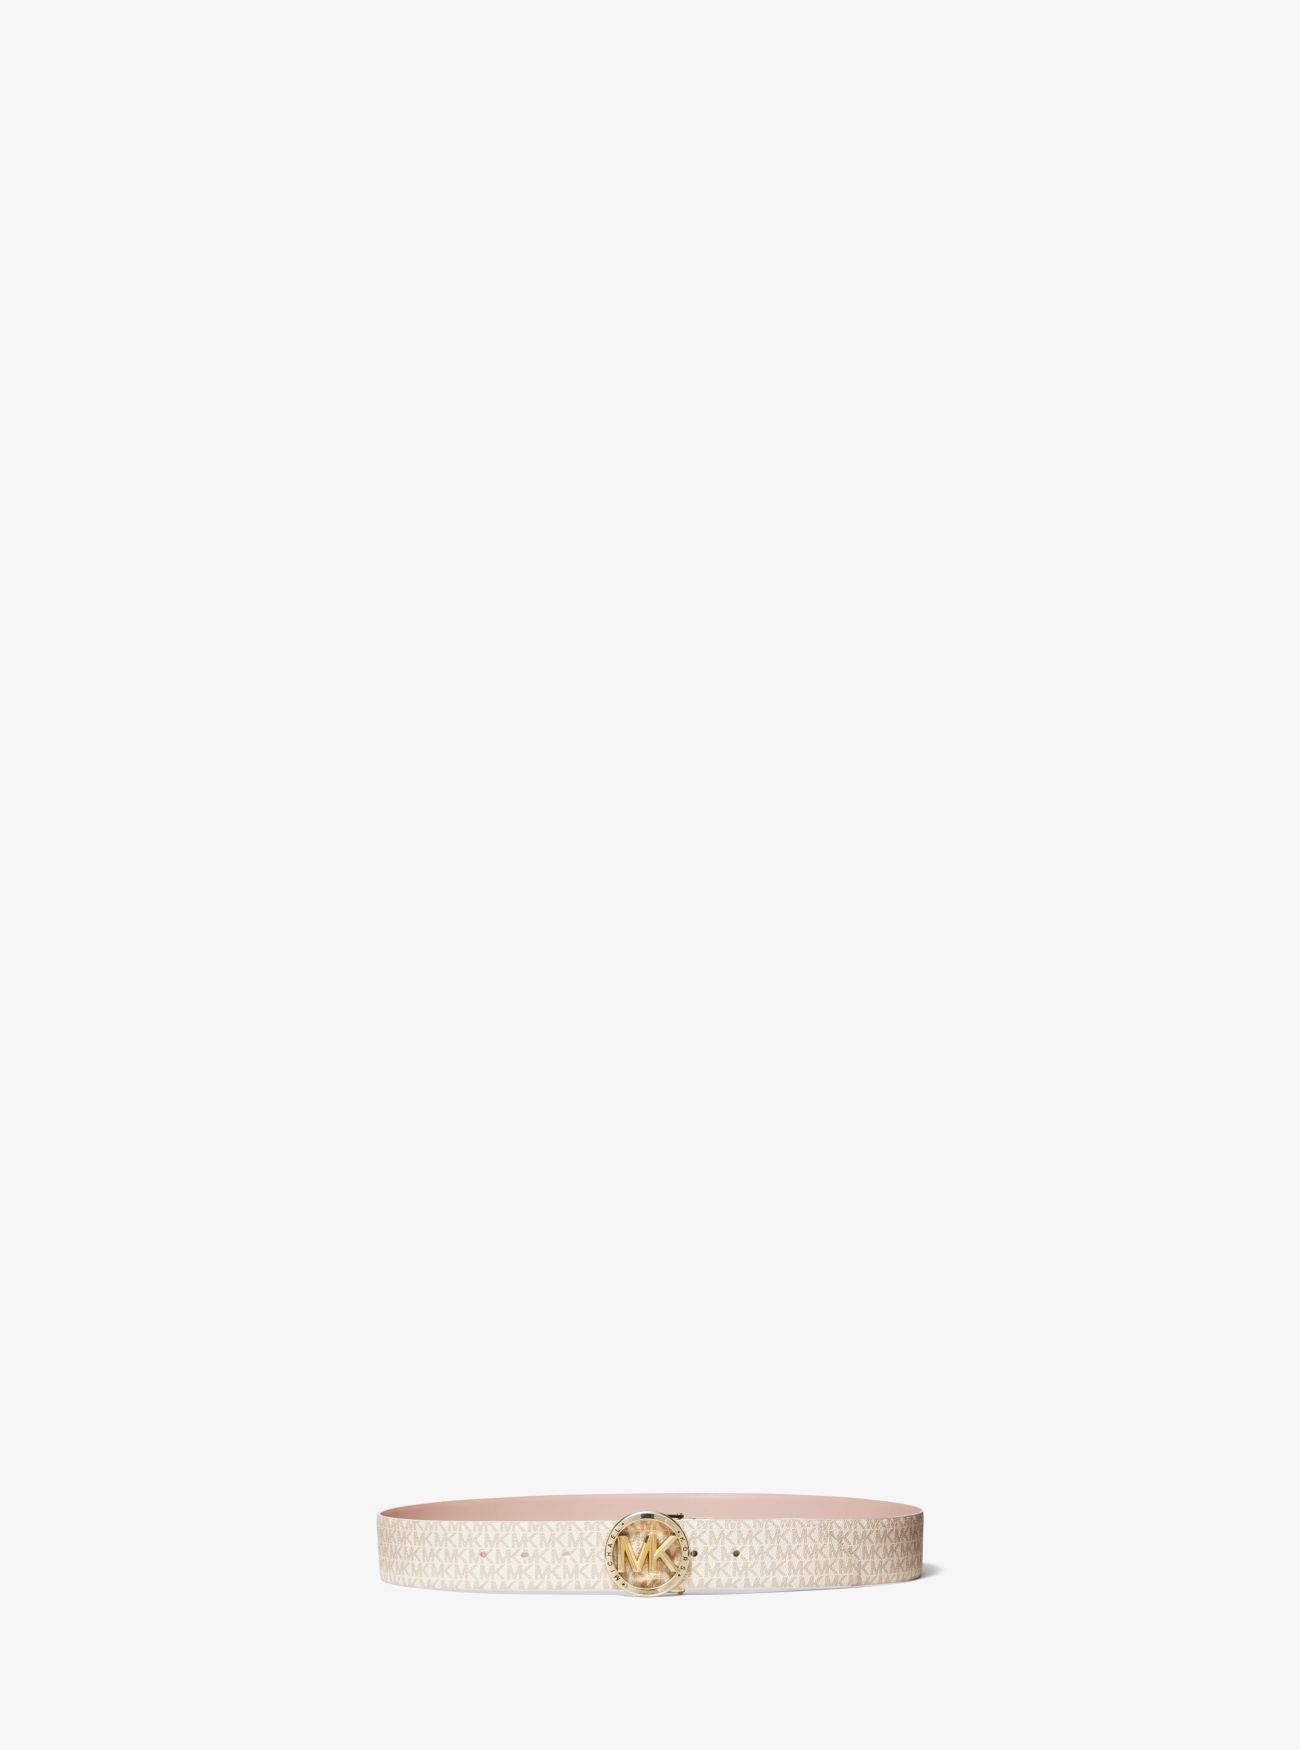 MK Reversible Logo and Leather Belt - Vanilla/soft Pink - Michael Kors